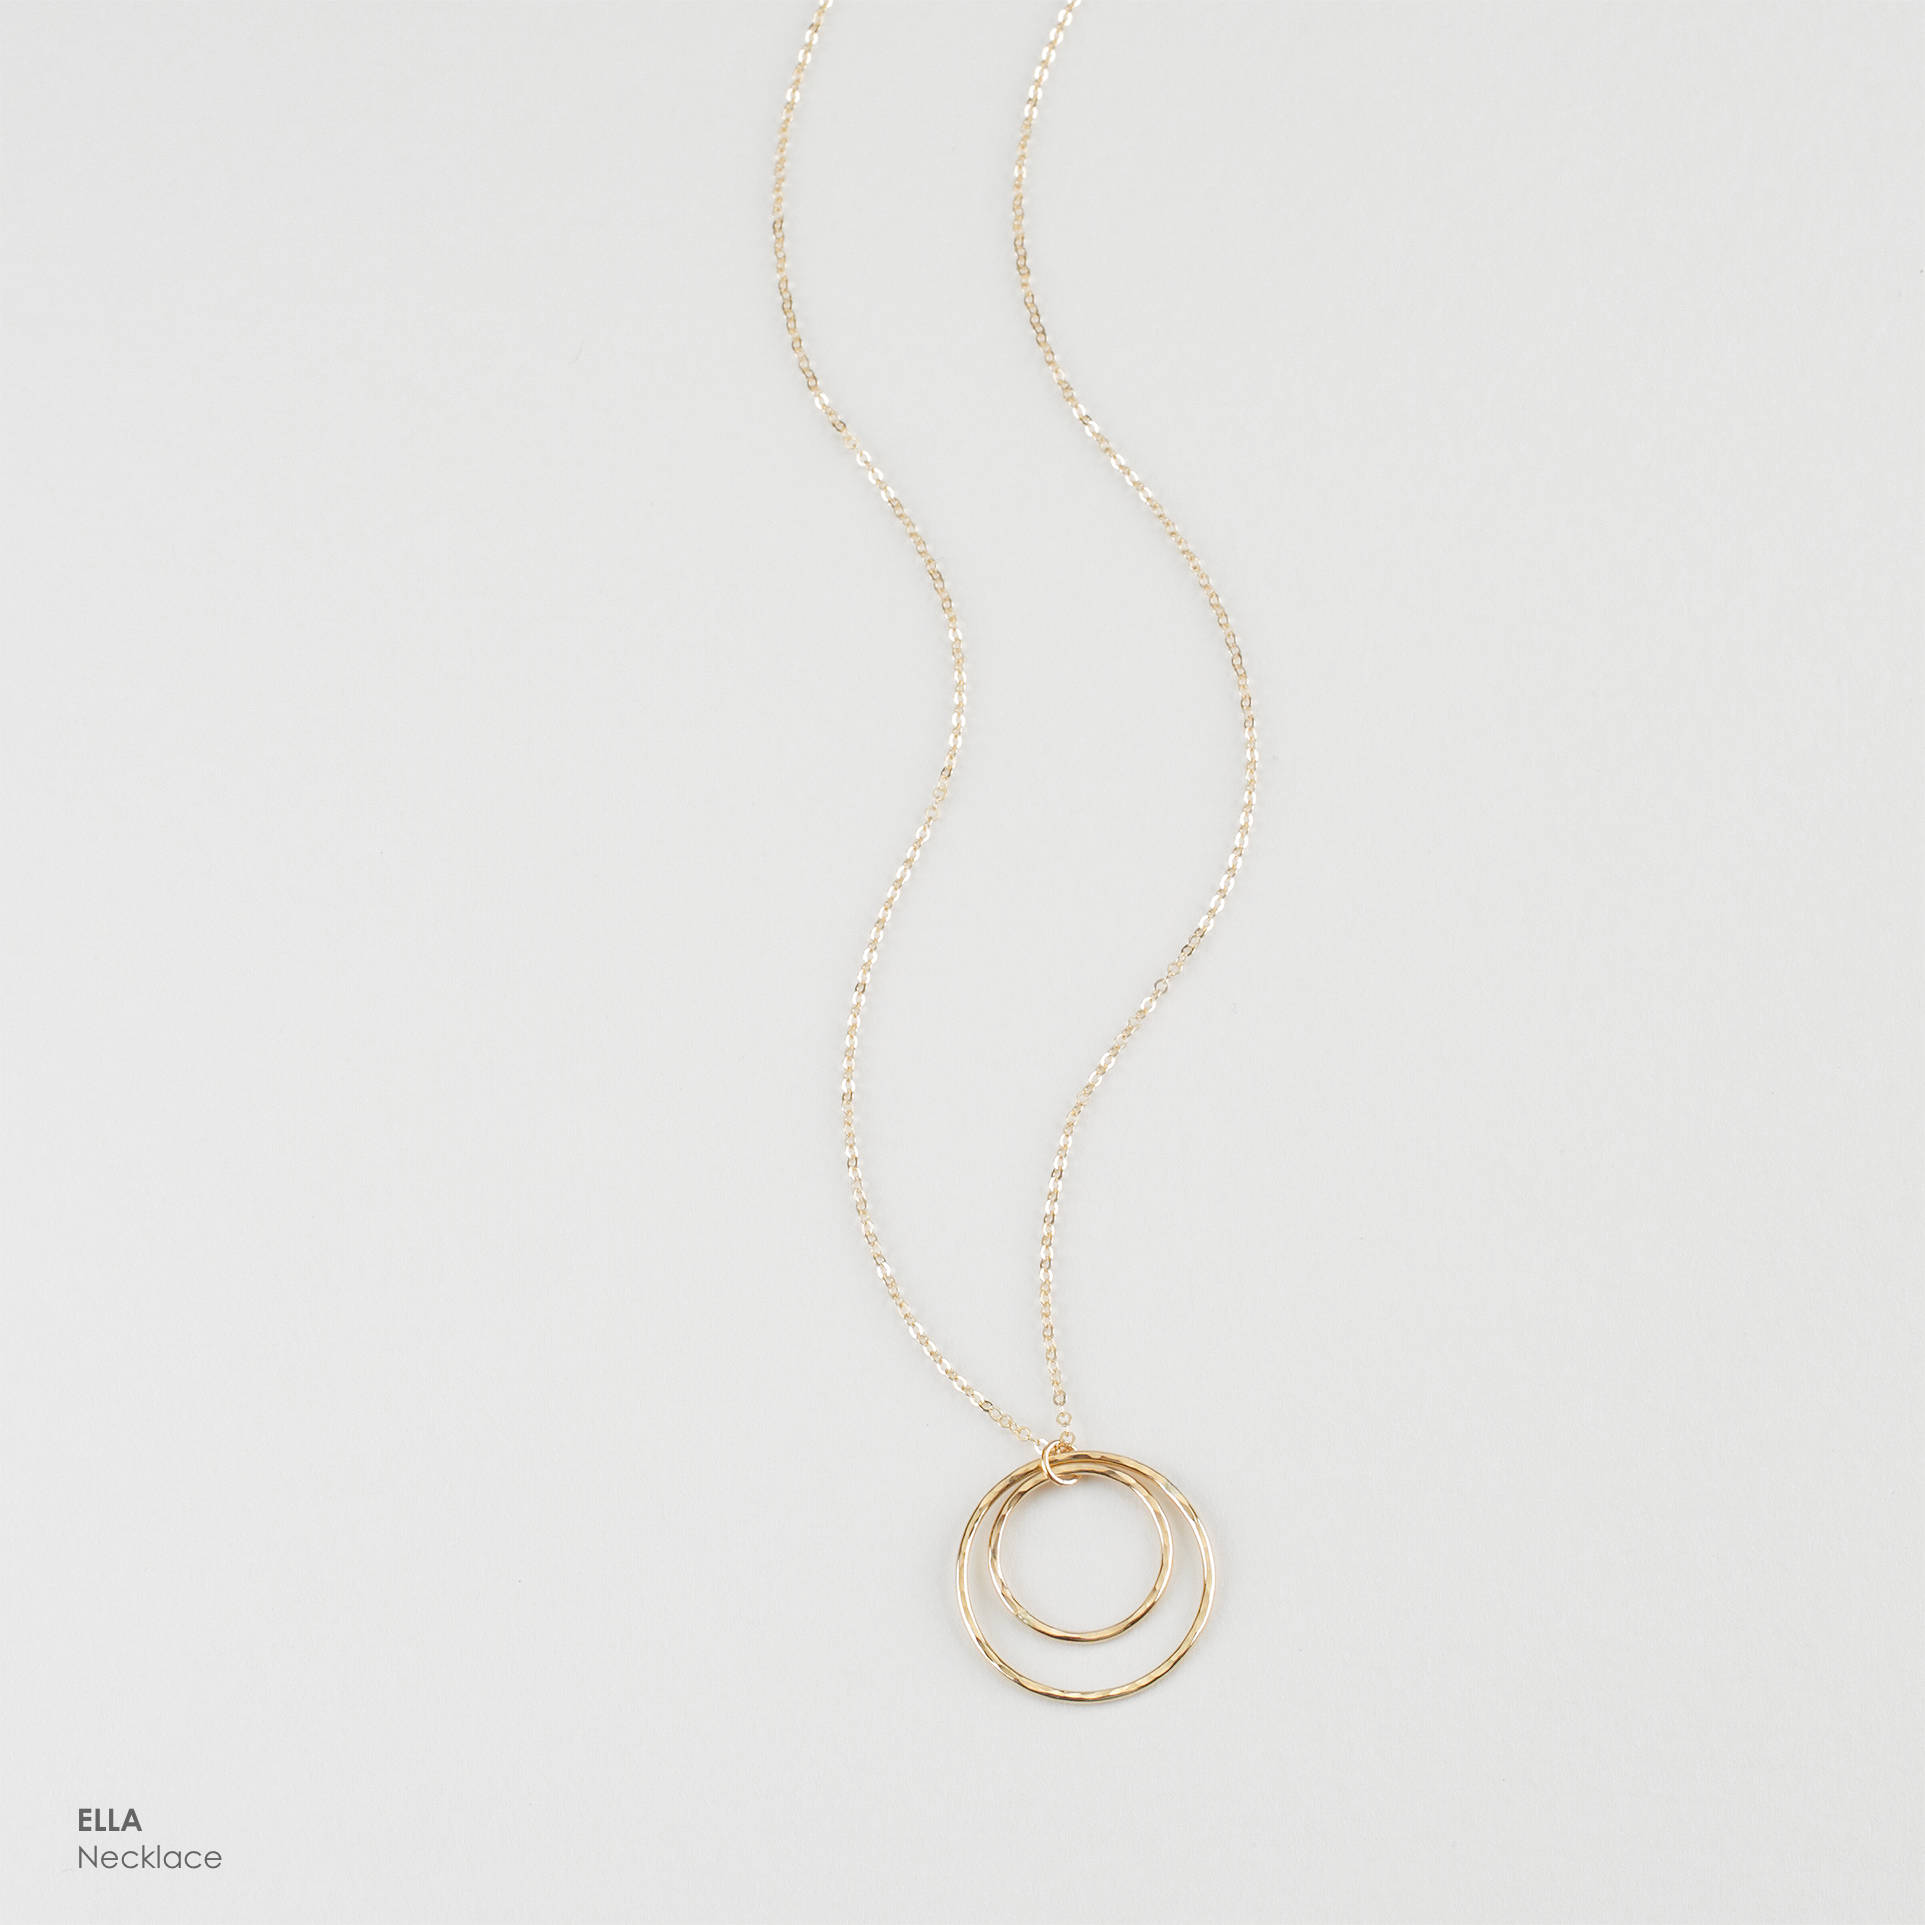 ELLA Necklace Double Circle Necklace Simple Dainty | Etsy